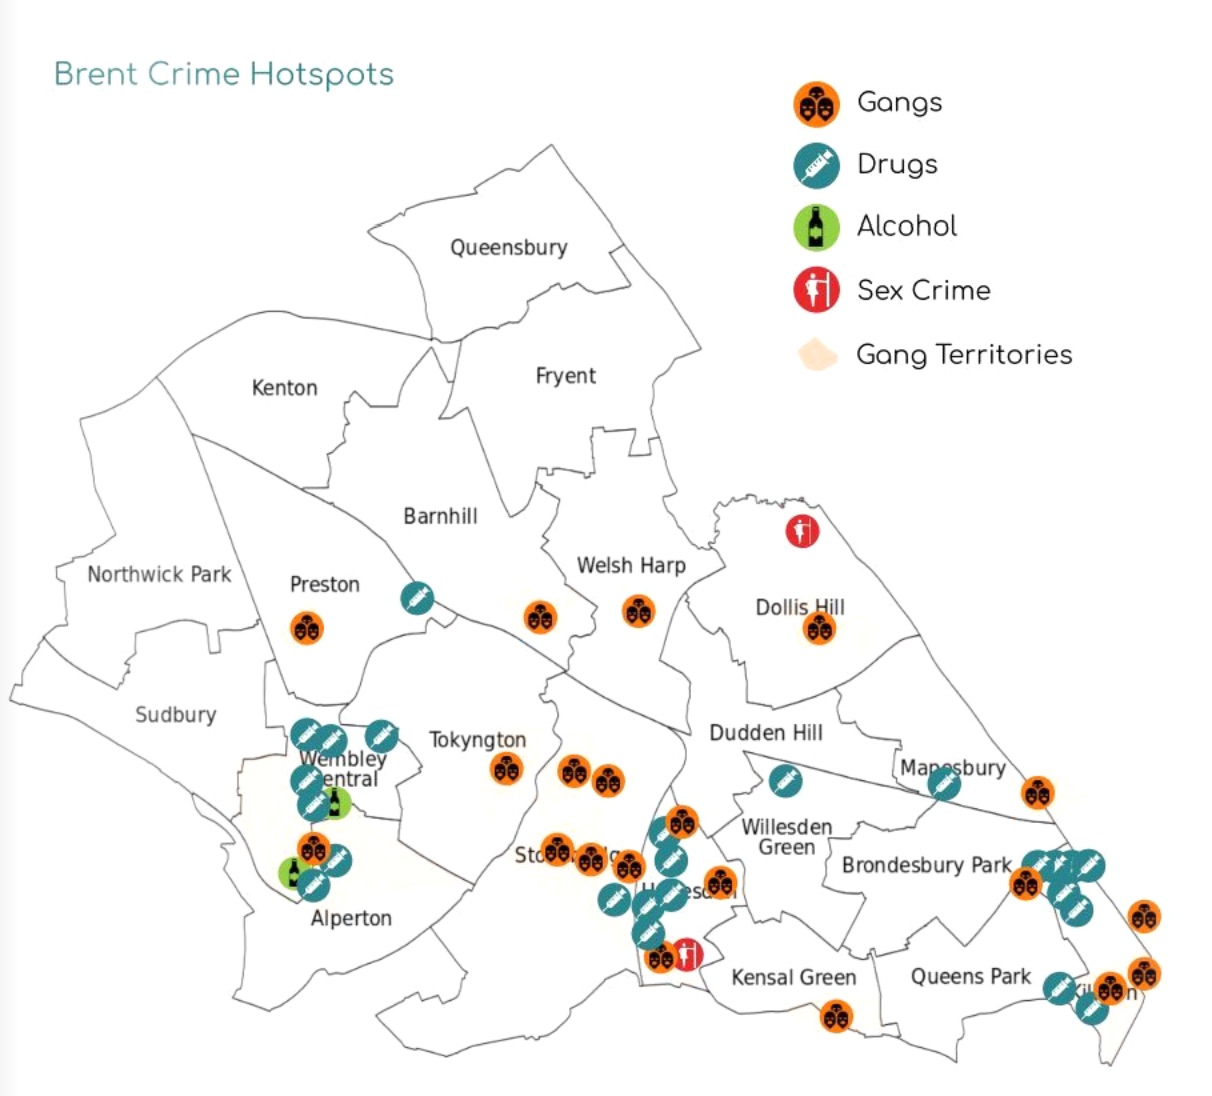 Crime_Hot-Spots_Map_Brent_Borough_London-Ingenious-Group_research